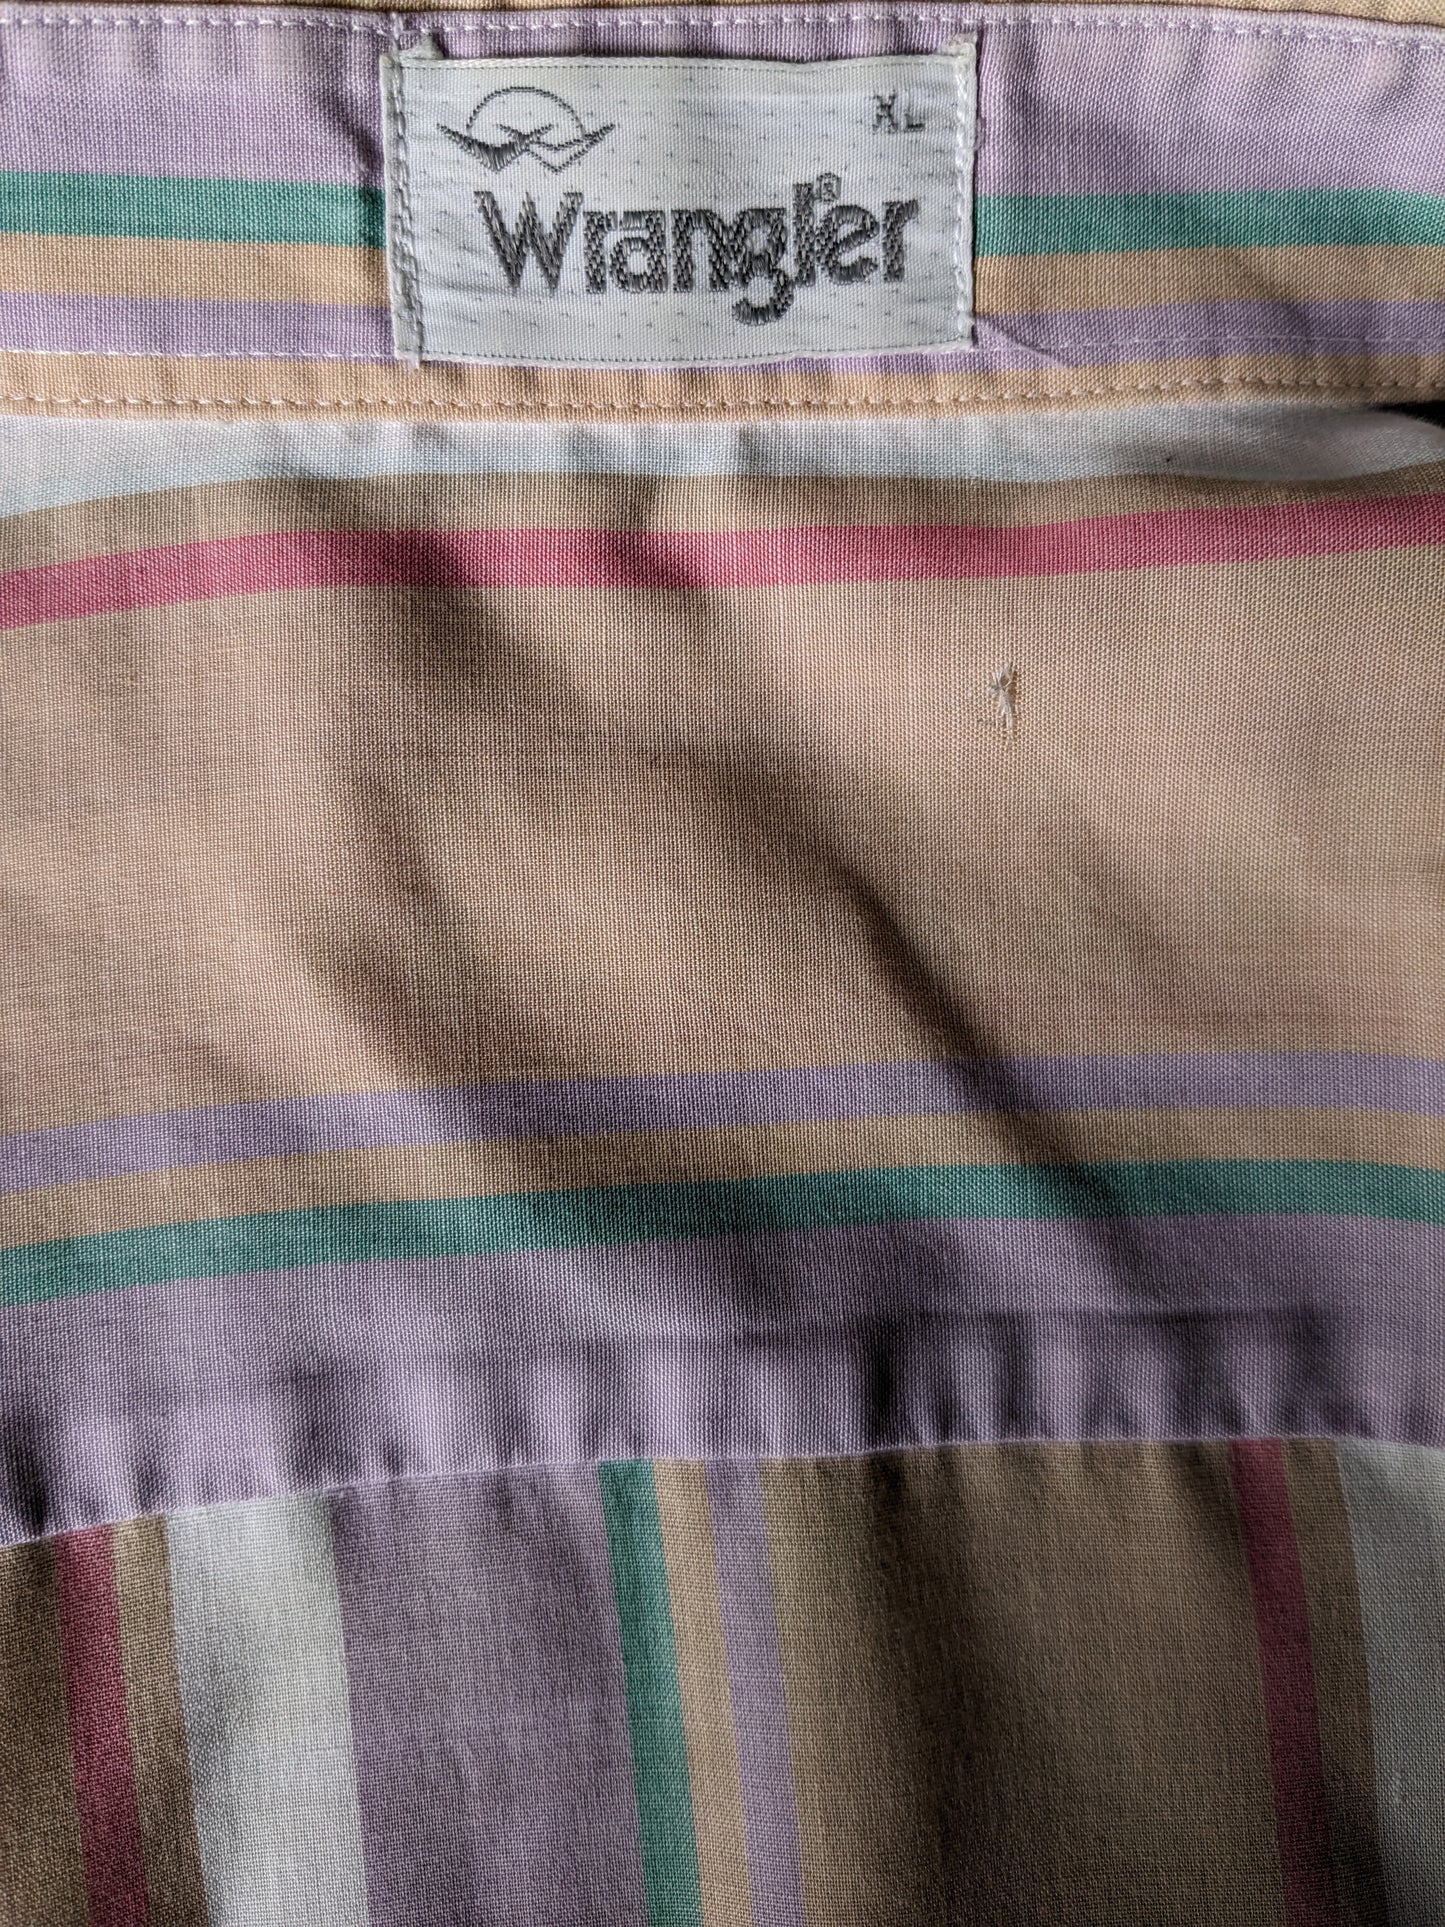 Vintage Wrangler shirt. Pink purple green orange striped. Size XL.